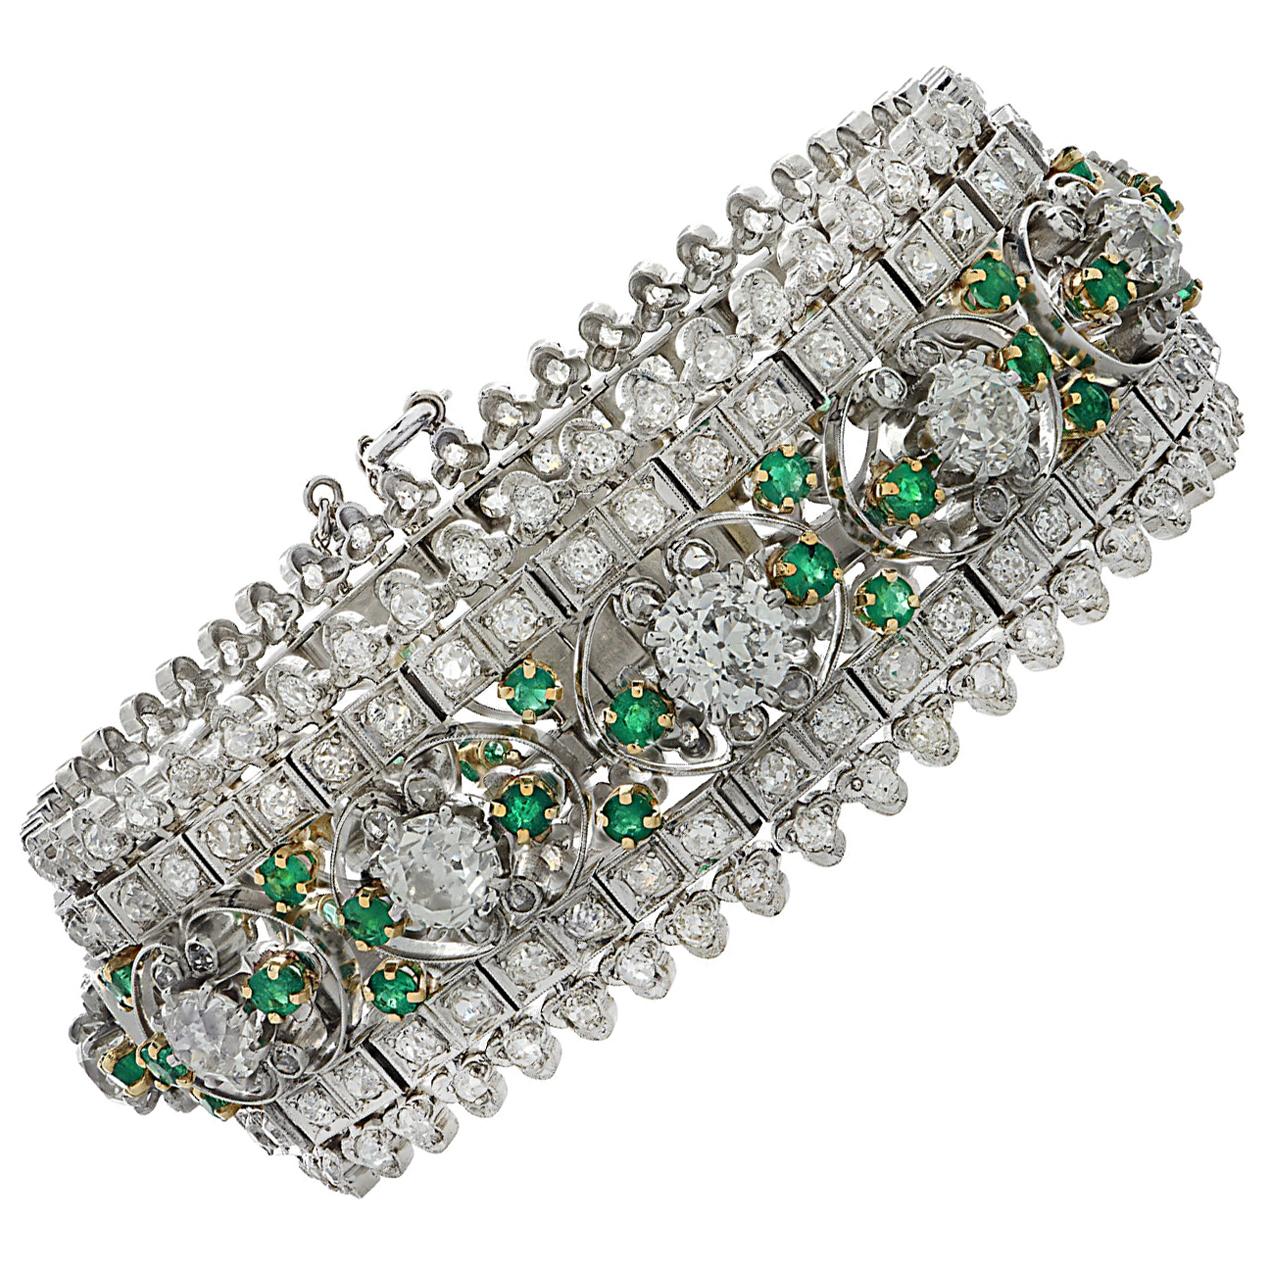 Edwardian Marcus & Co. Old Mine Cut Diamond and Emerald Bracelet